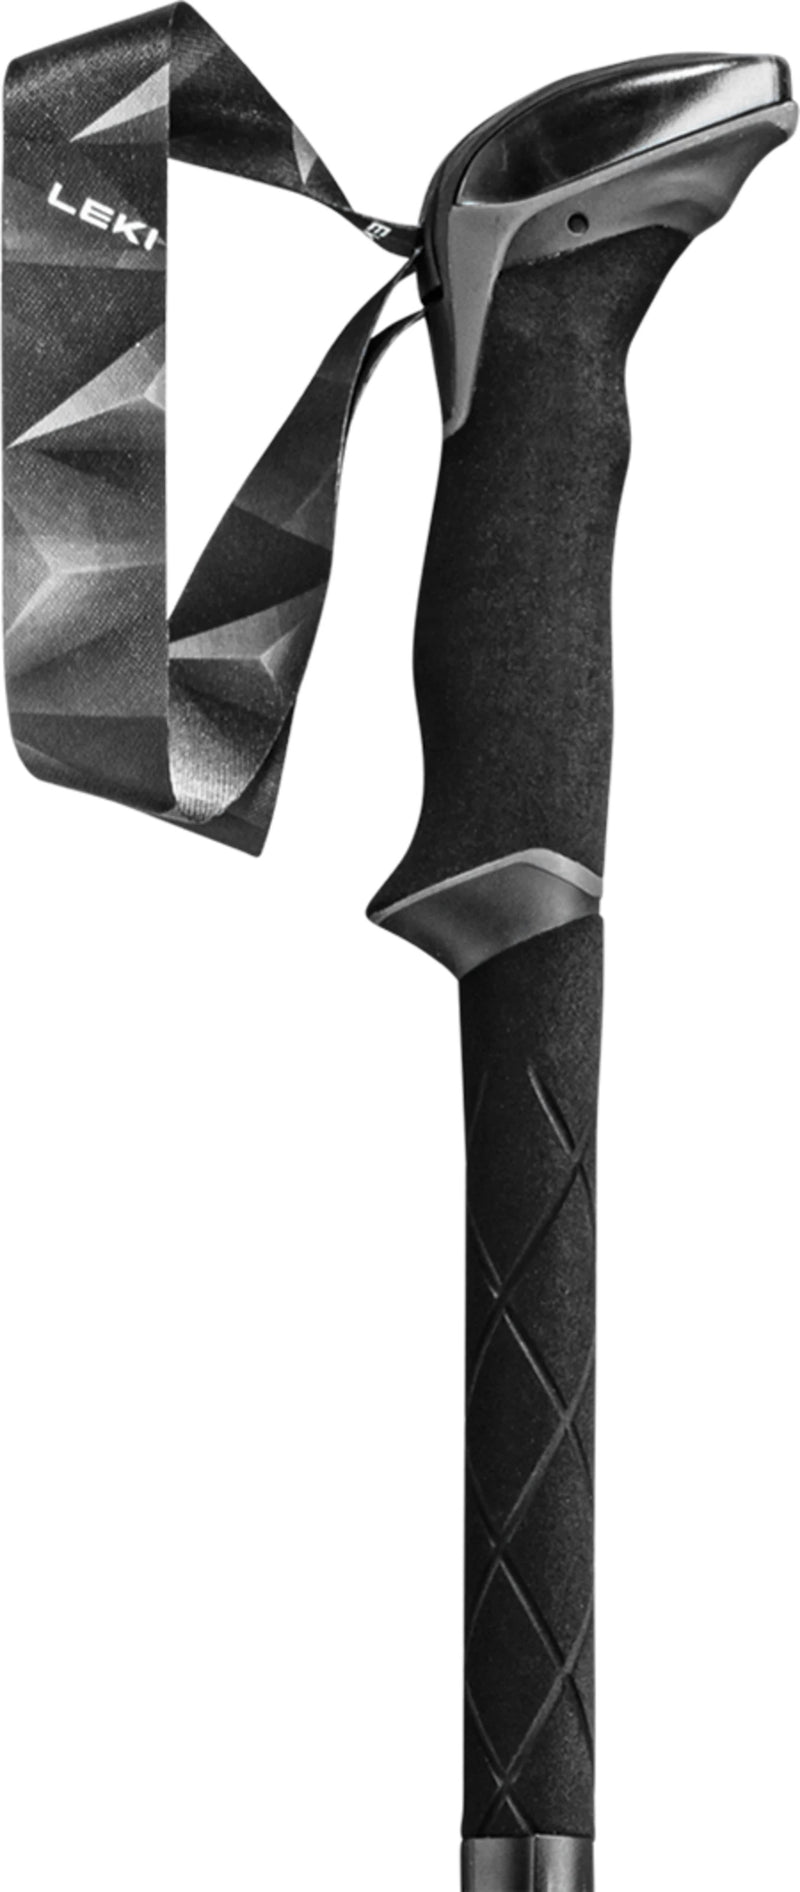 Leki MAKALU FX CARBON Wanderstöcke black-orange-naturalcarbon (110-130 cm) Unisex